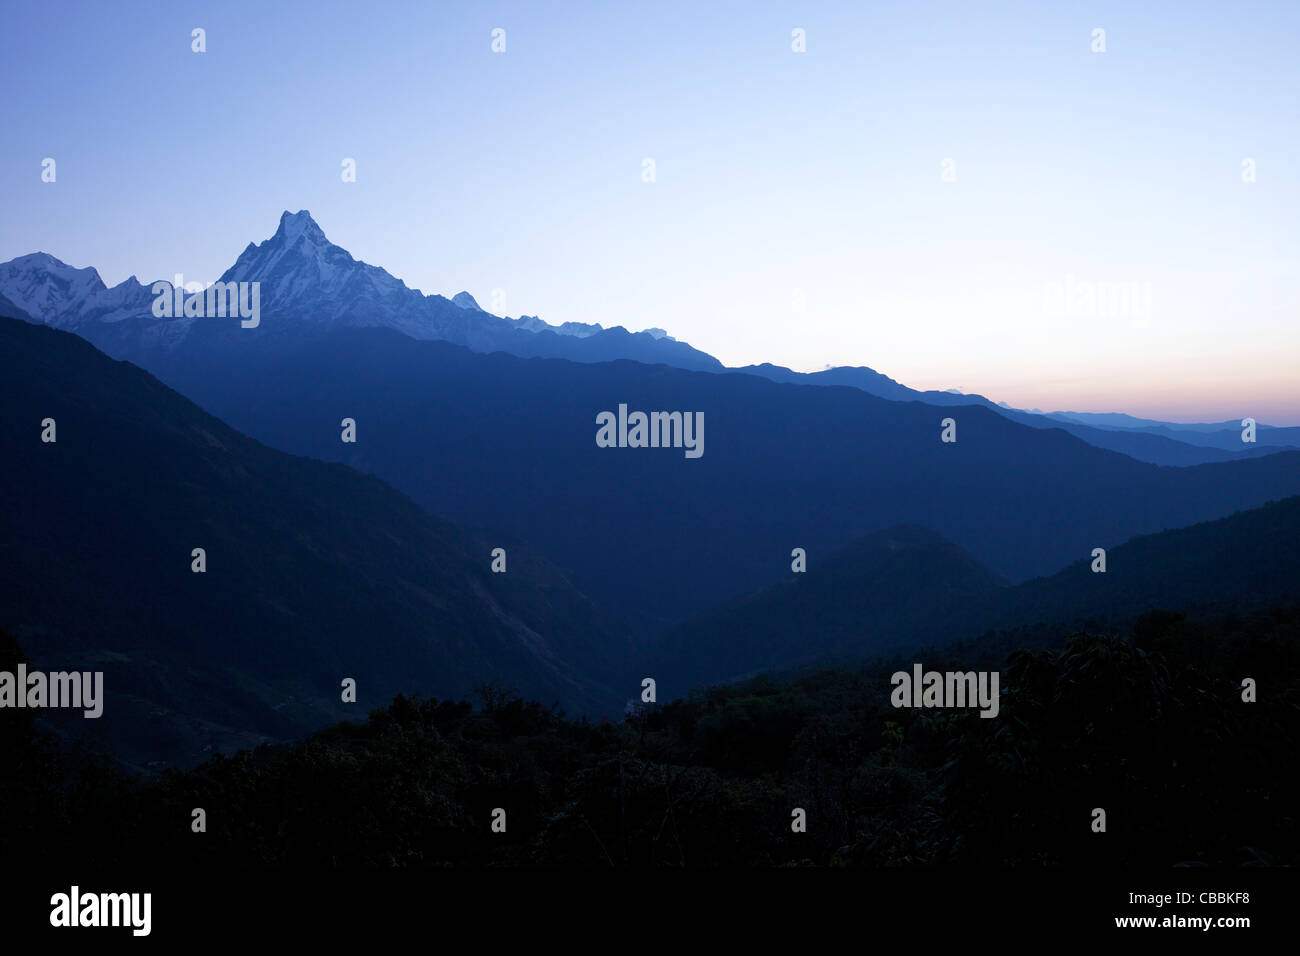 Slopes of Fishtail mountain, Machhapuchhare at dawn, from Tadapani, Annapurna Region, Himalayas, Nepal, Asia Stock Photo